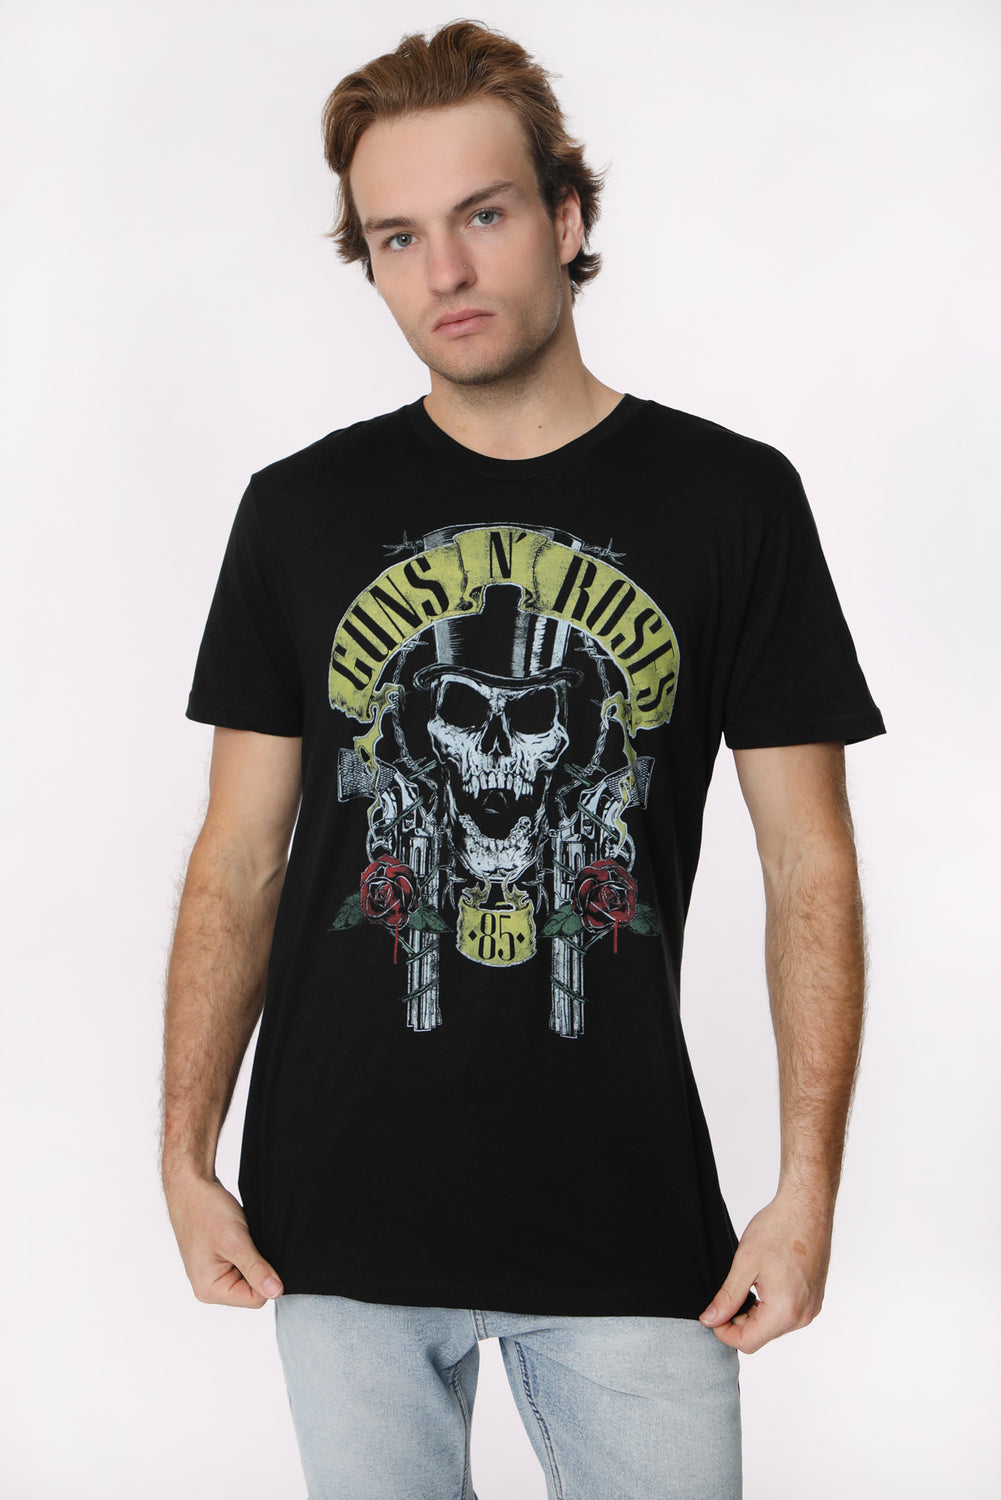 T-Shirt Imprimé Guns N' Roses Homme T-Shirt Imprimé Guns N' Roses Homme